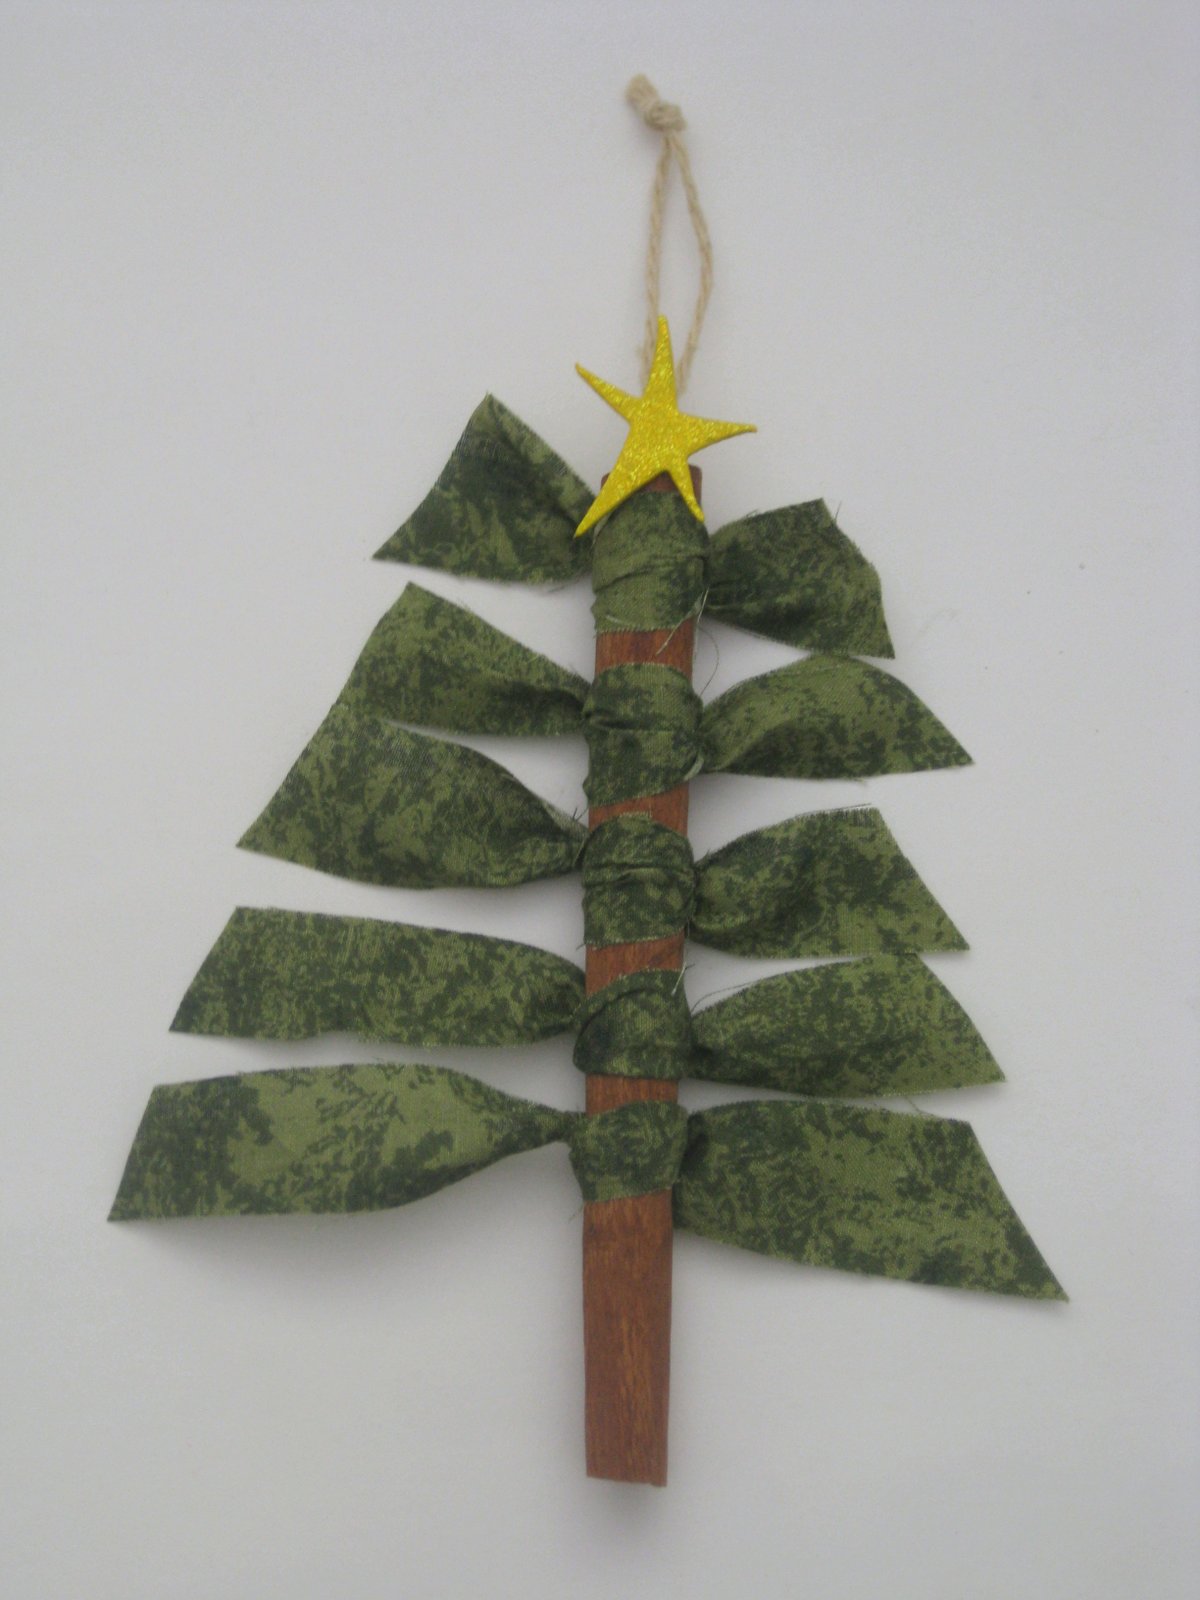 Cindy deRosier: My Creative Life: Cinnamon Stick Tree Ornaments